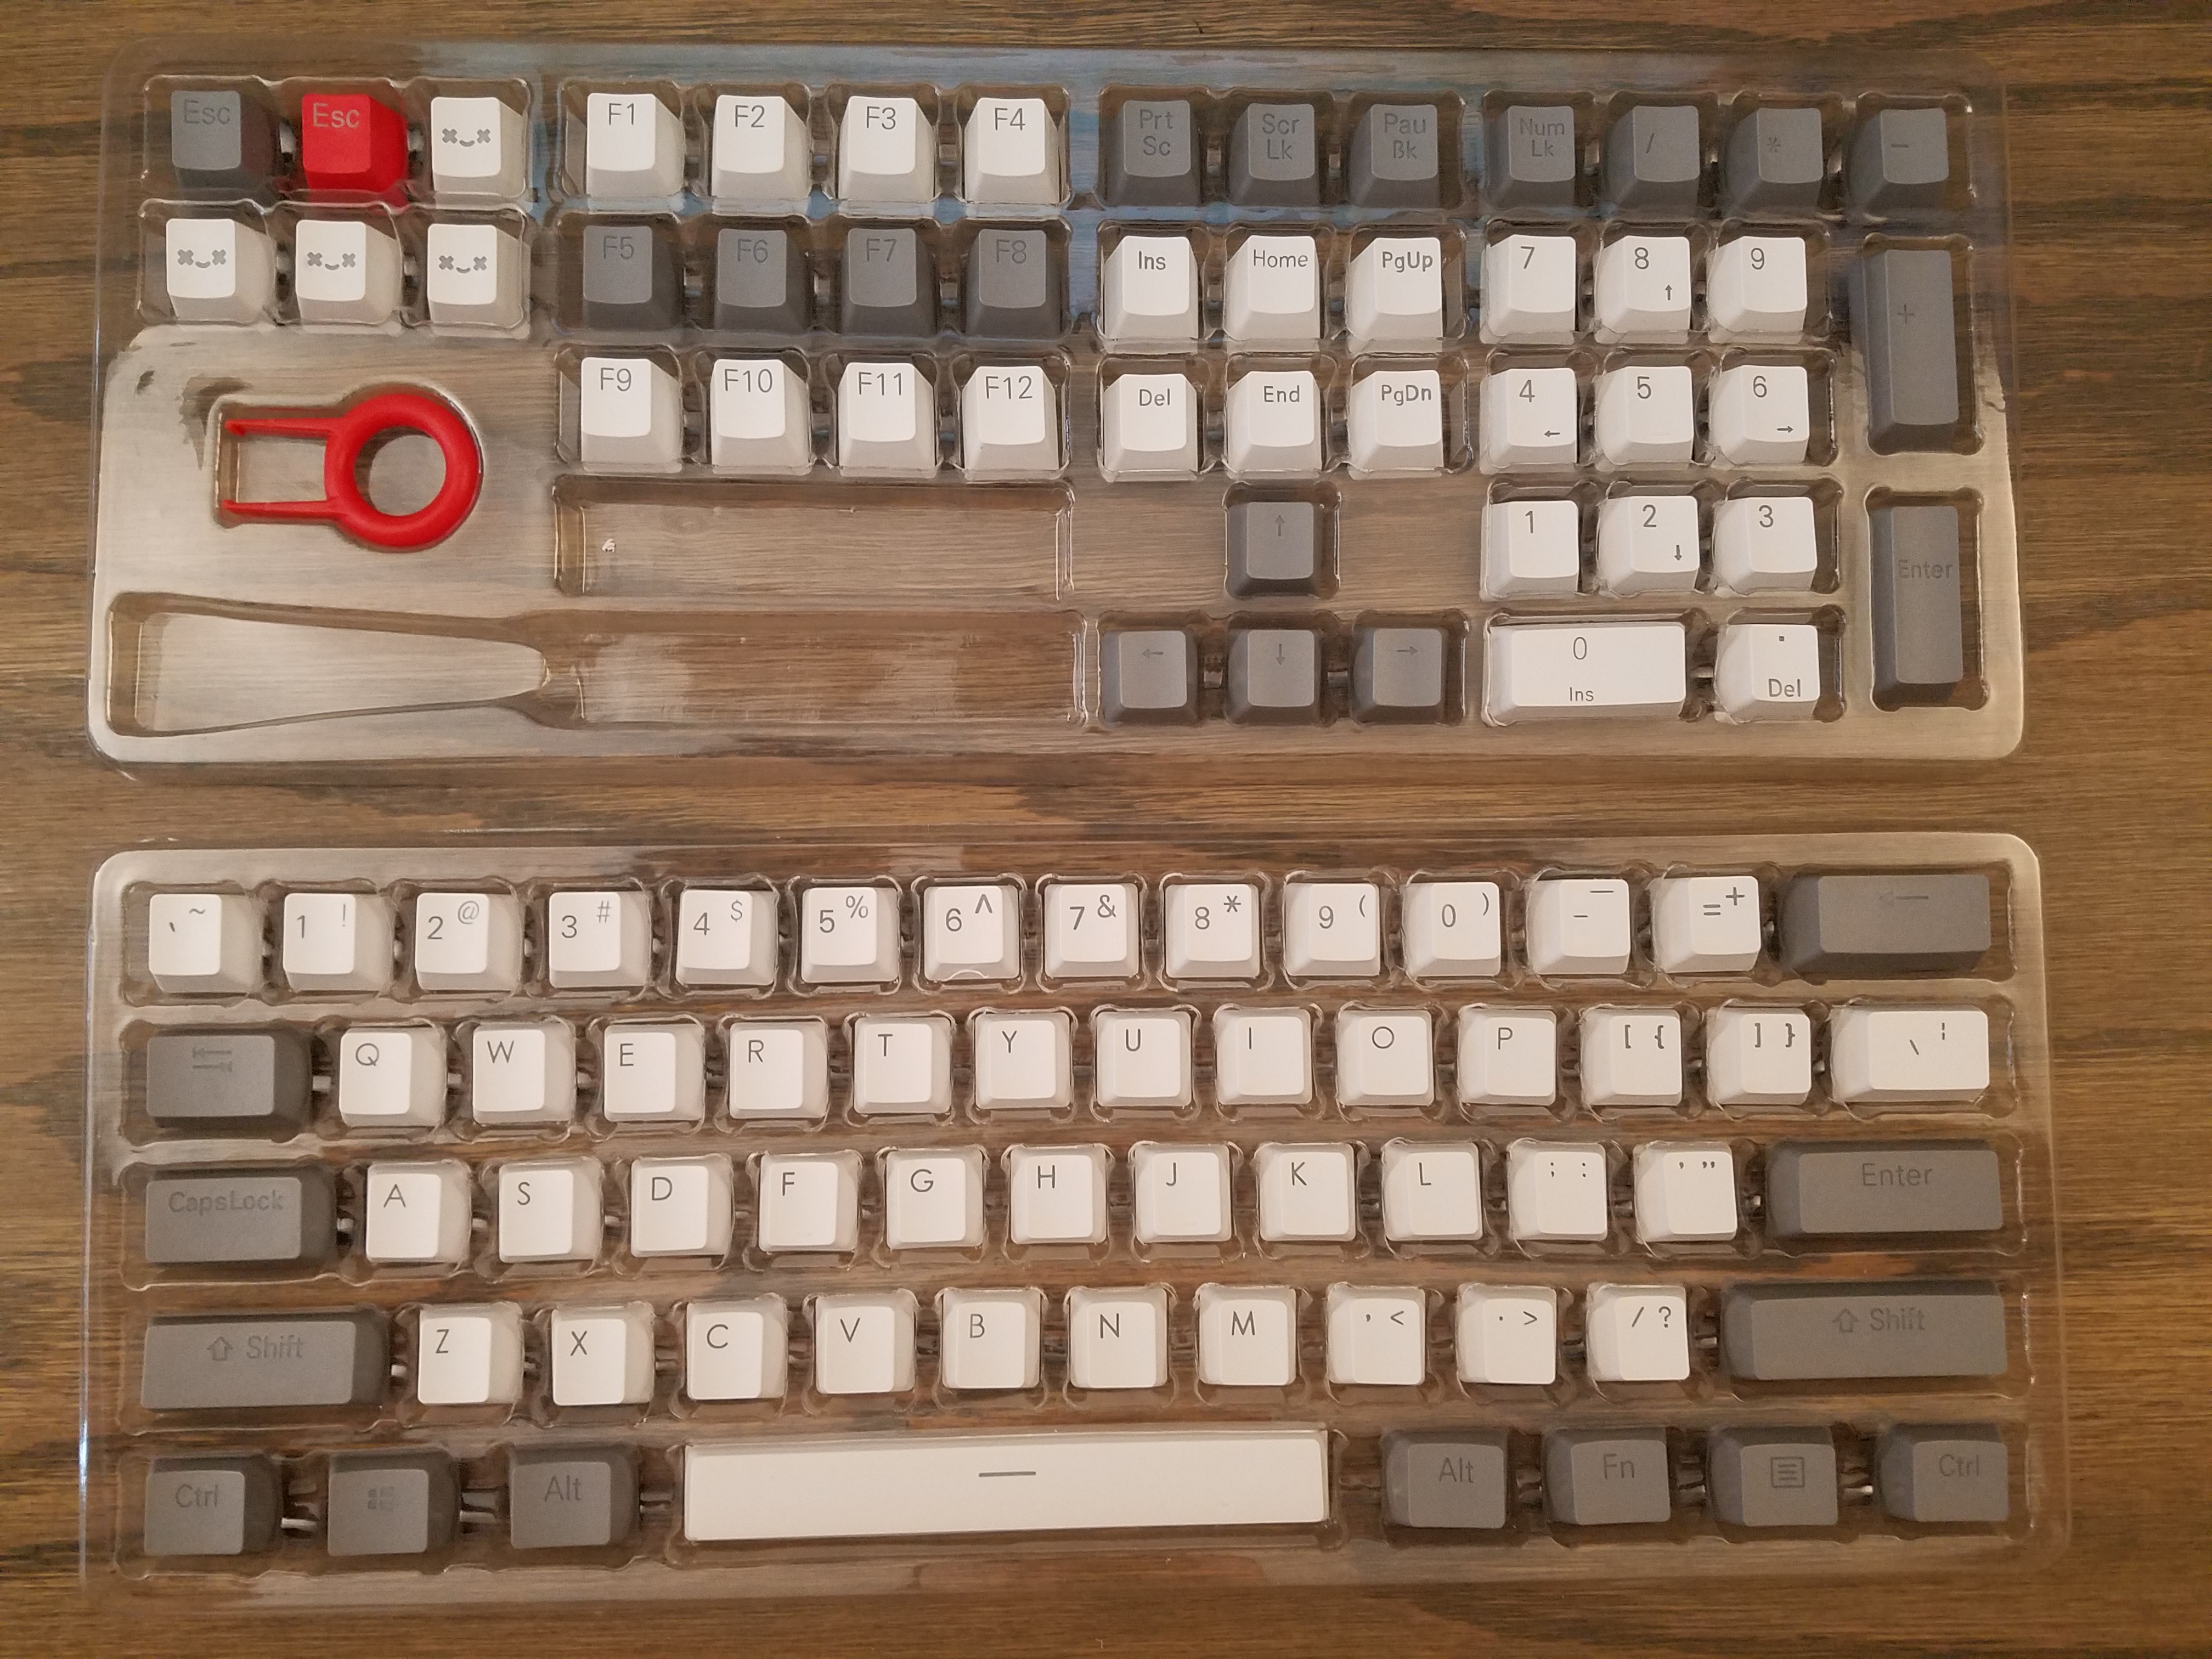 Dz60 Keyboard Build Patrick Henson